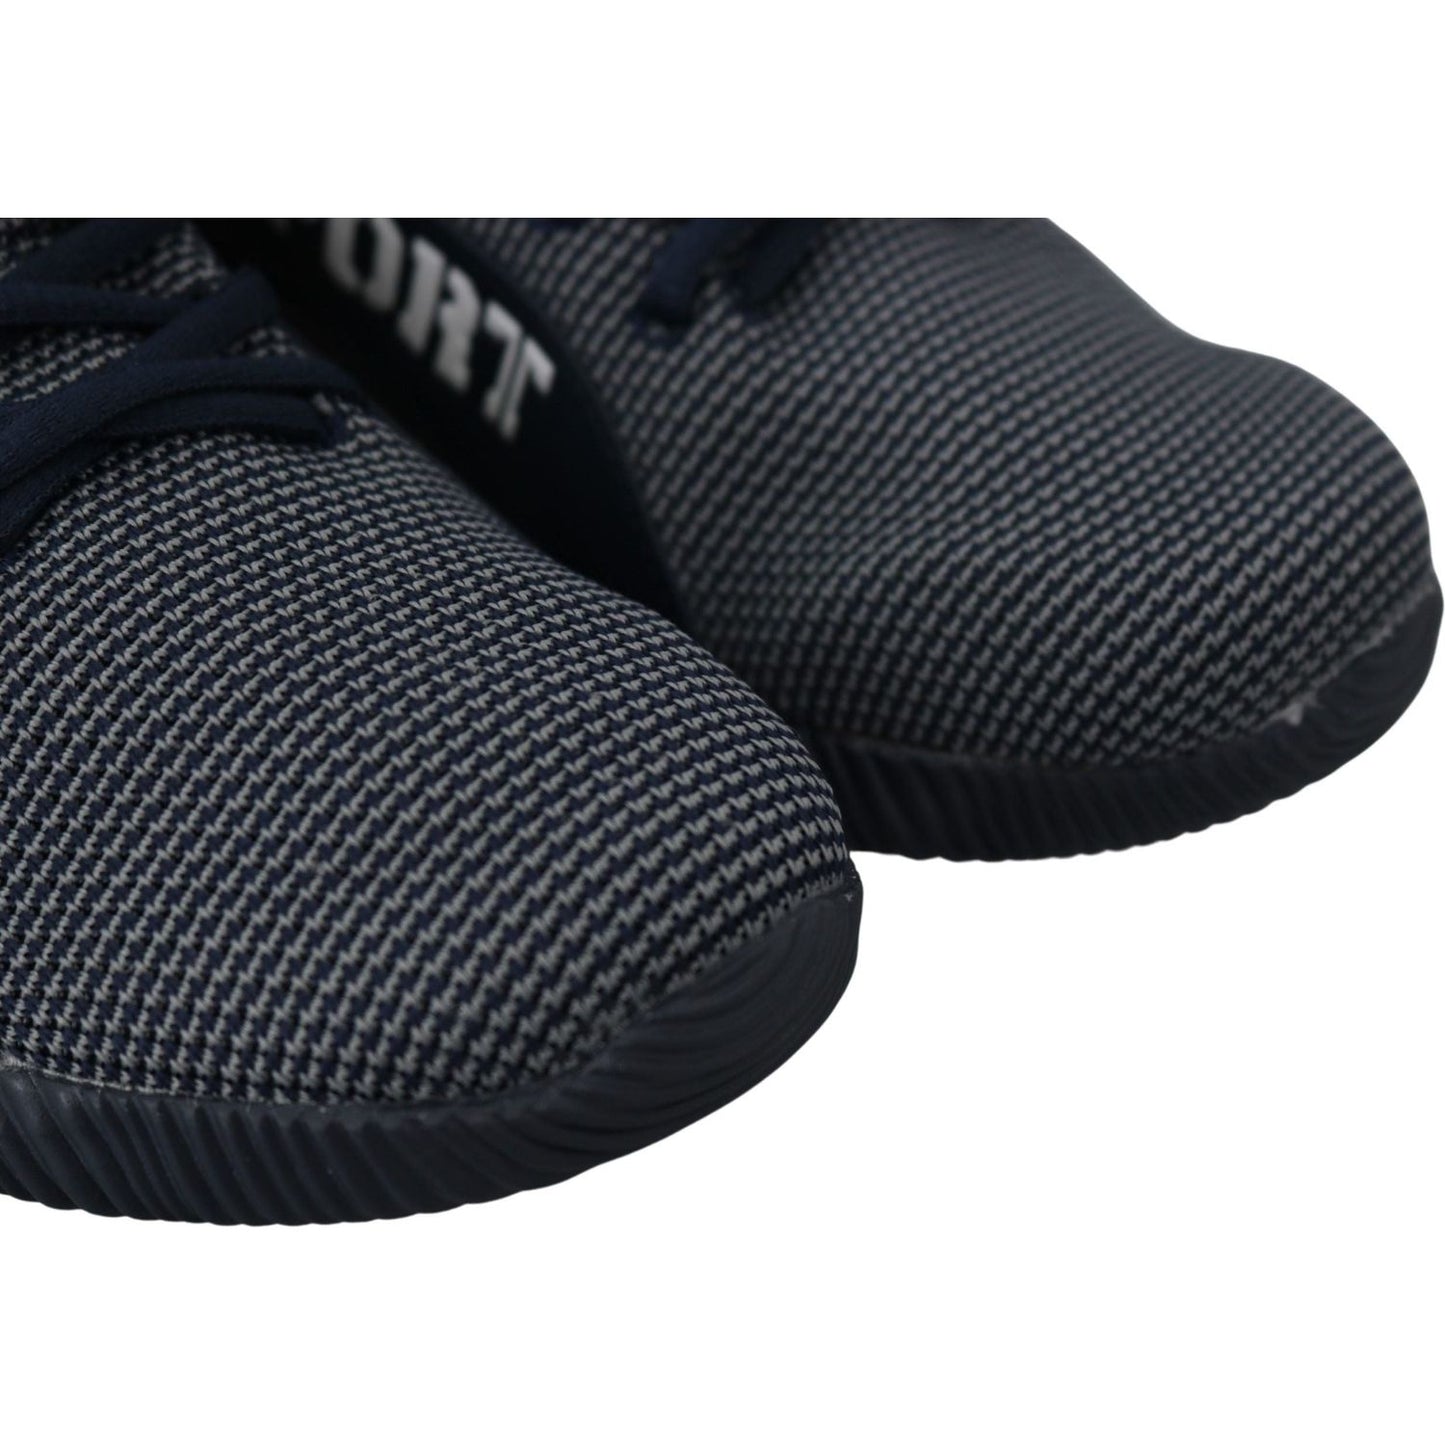 Plein Sport Exclusive Blue Indaco Carter Sneakers blue-indaco-polyester-carter-sneakers-shoes